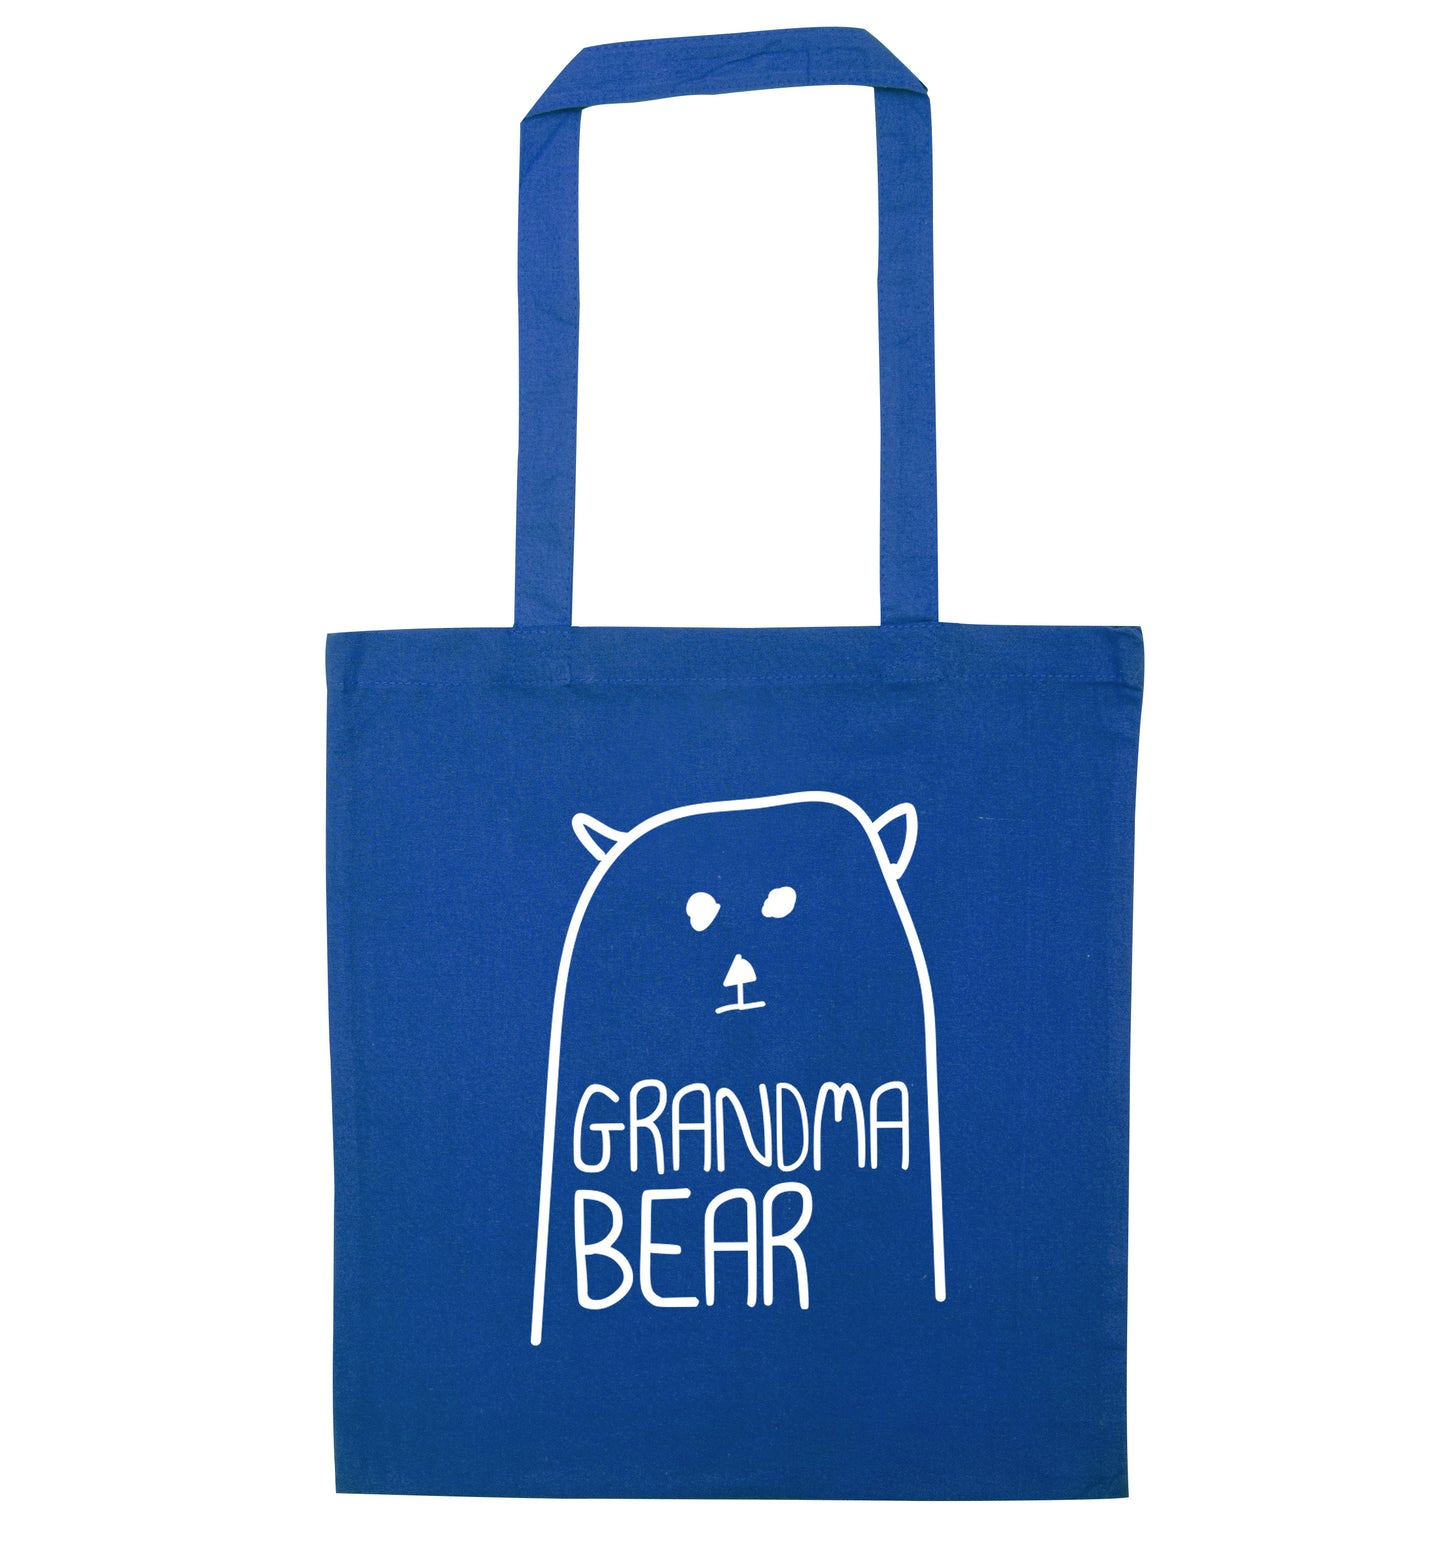 Grandma bear blue tote bag